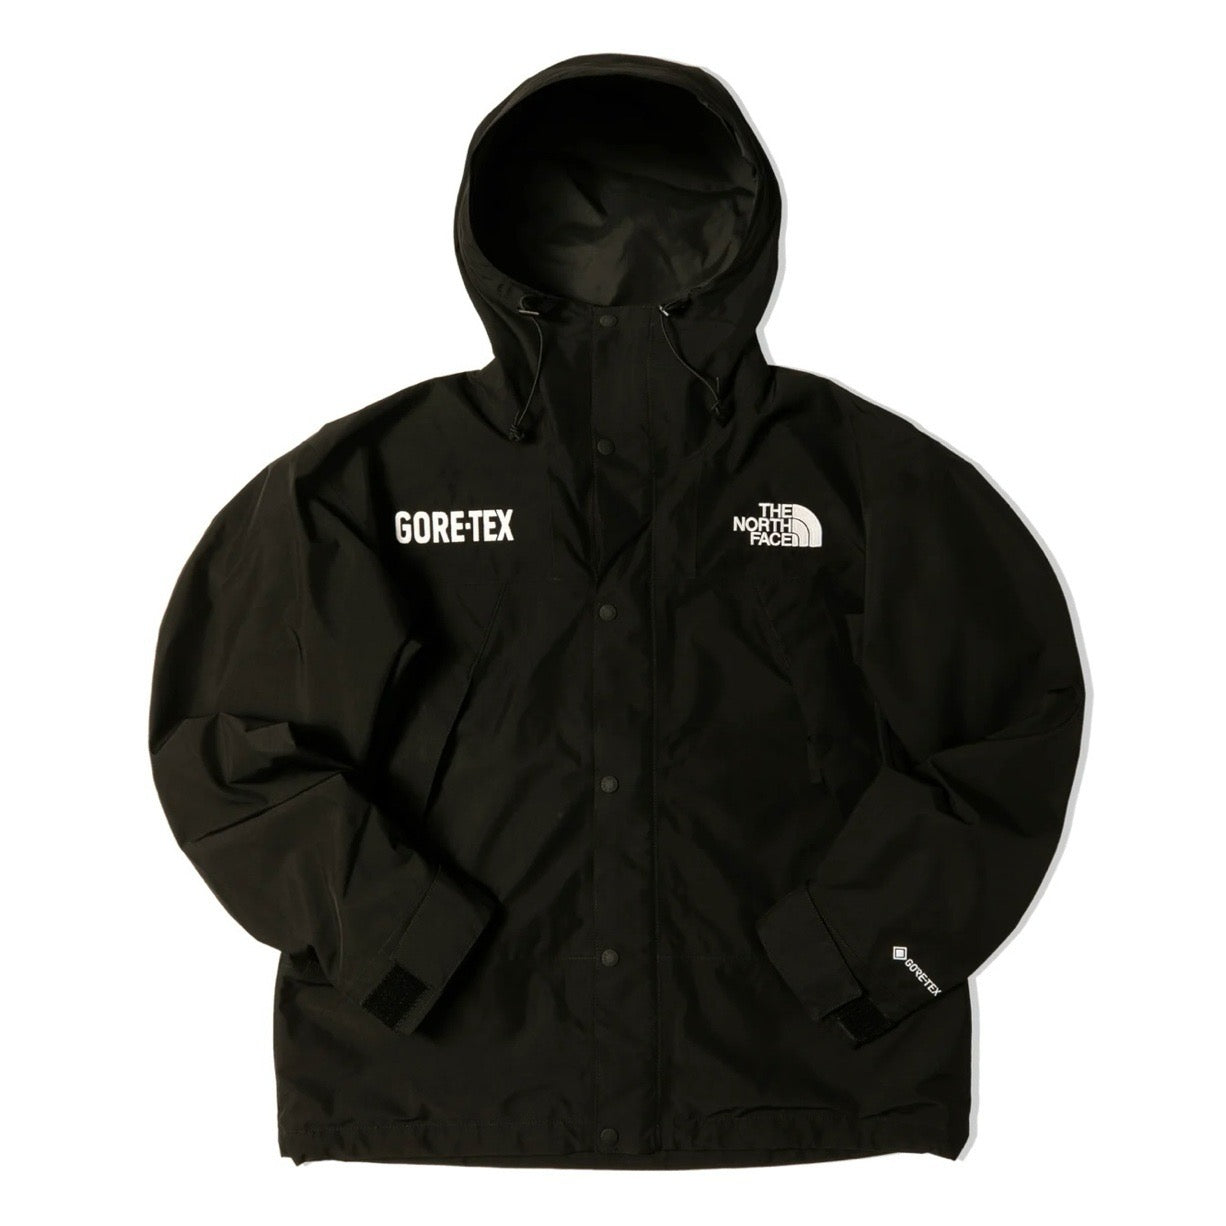 The North Face GTX Mountain Jacket Black